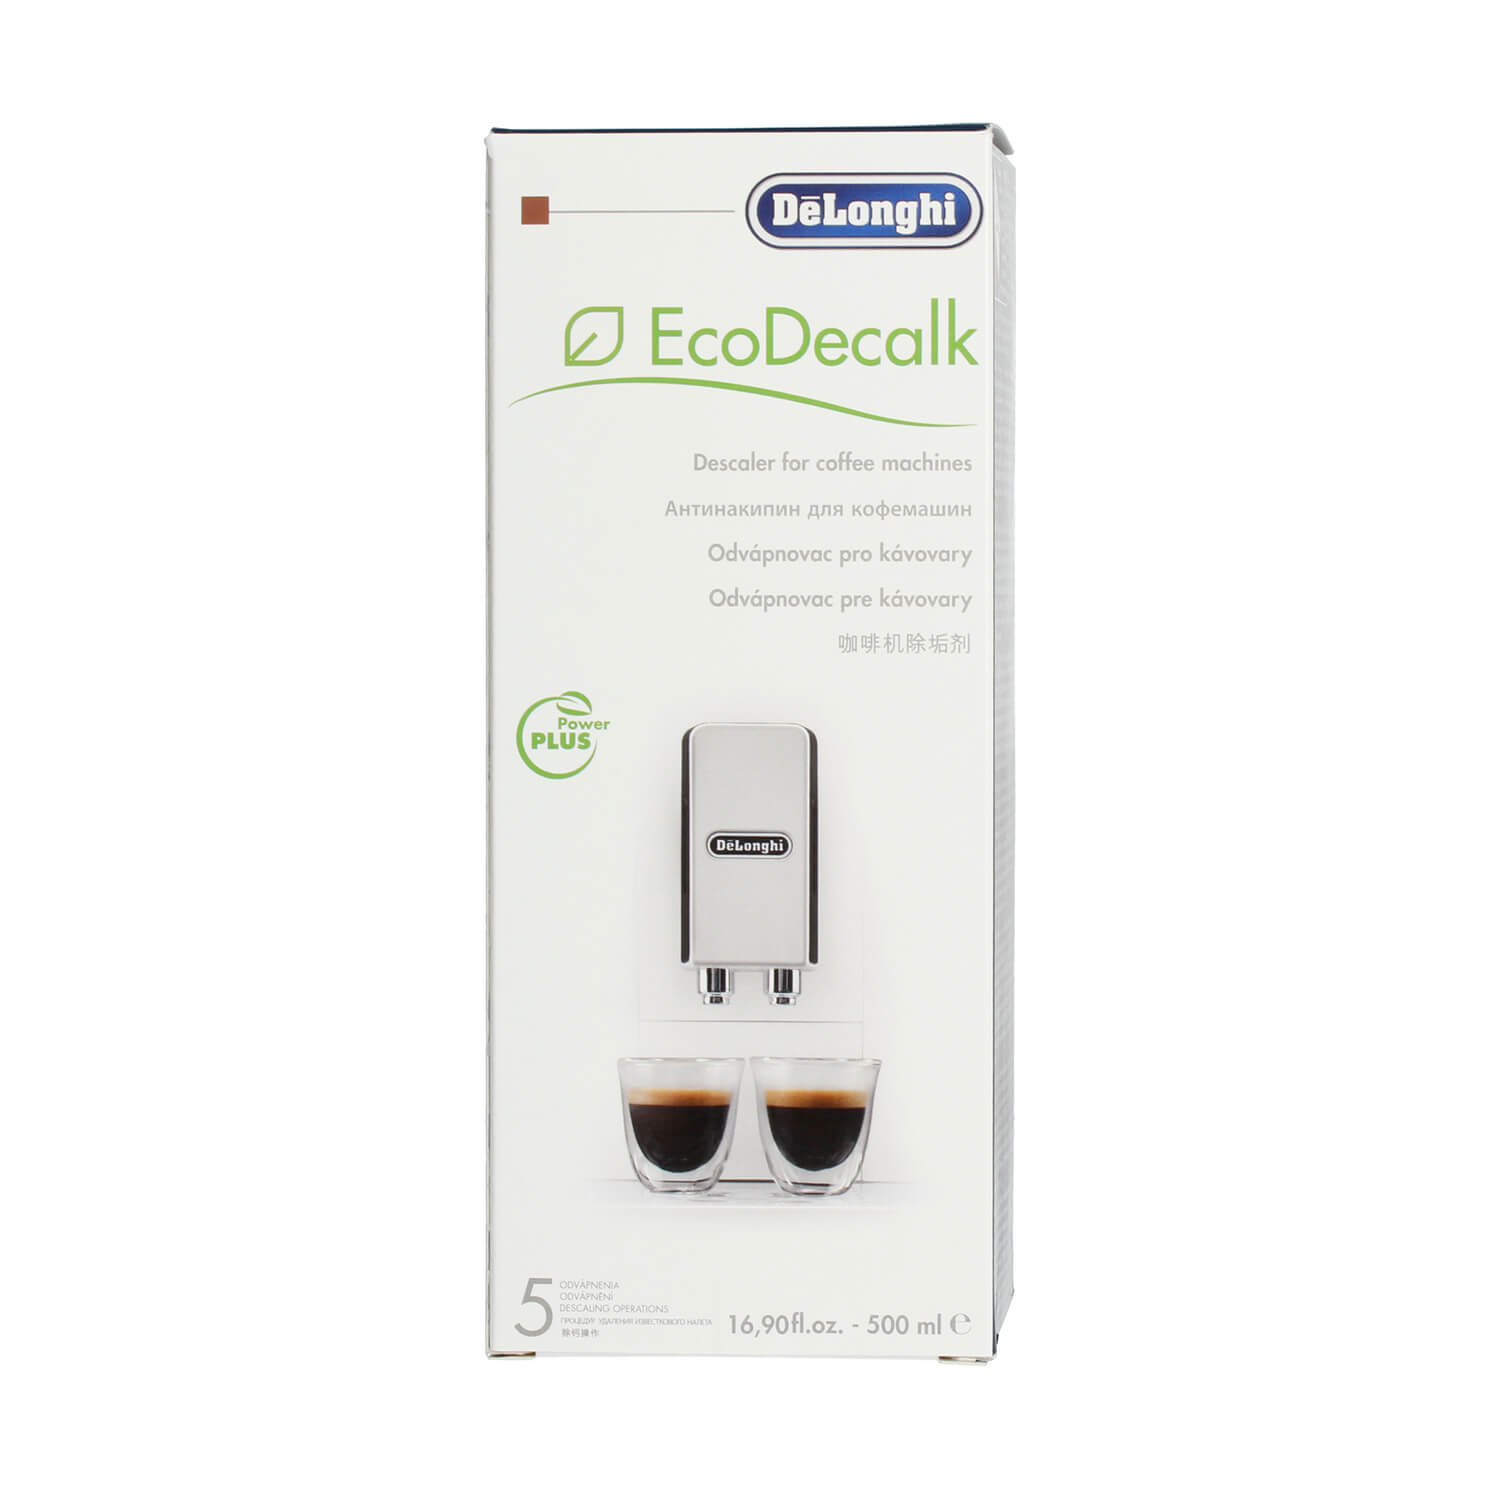 Delonghi Ecodecalk Coffee Machine Descaler Solution 500ml New In Box